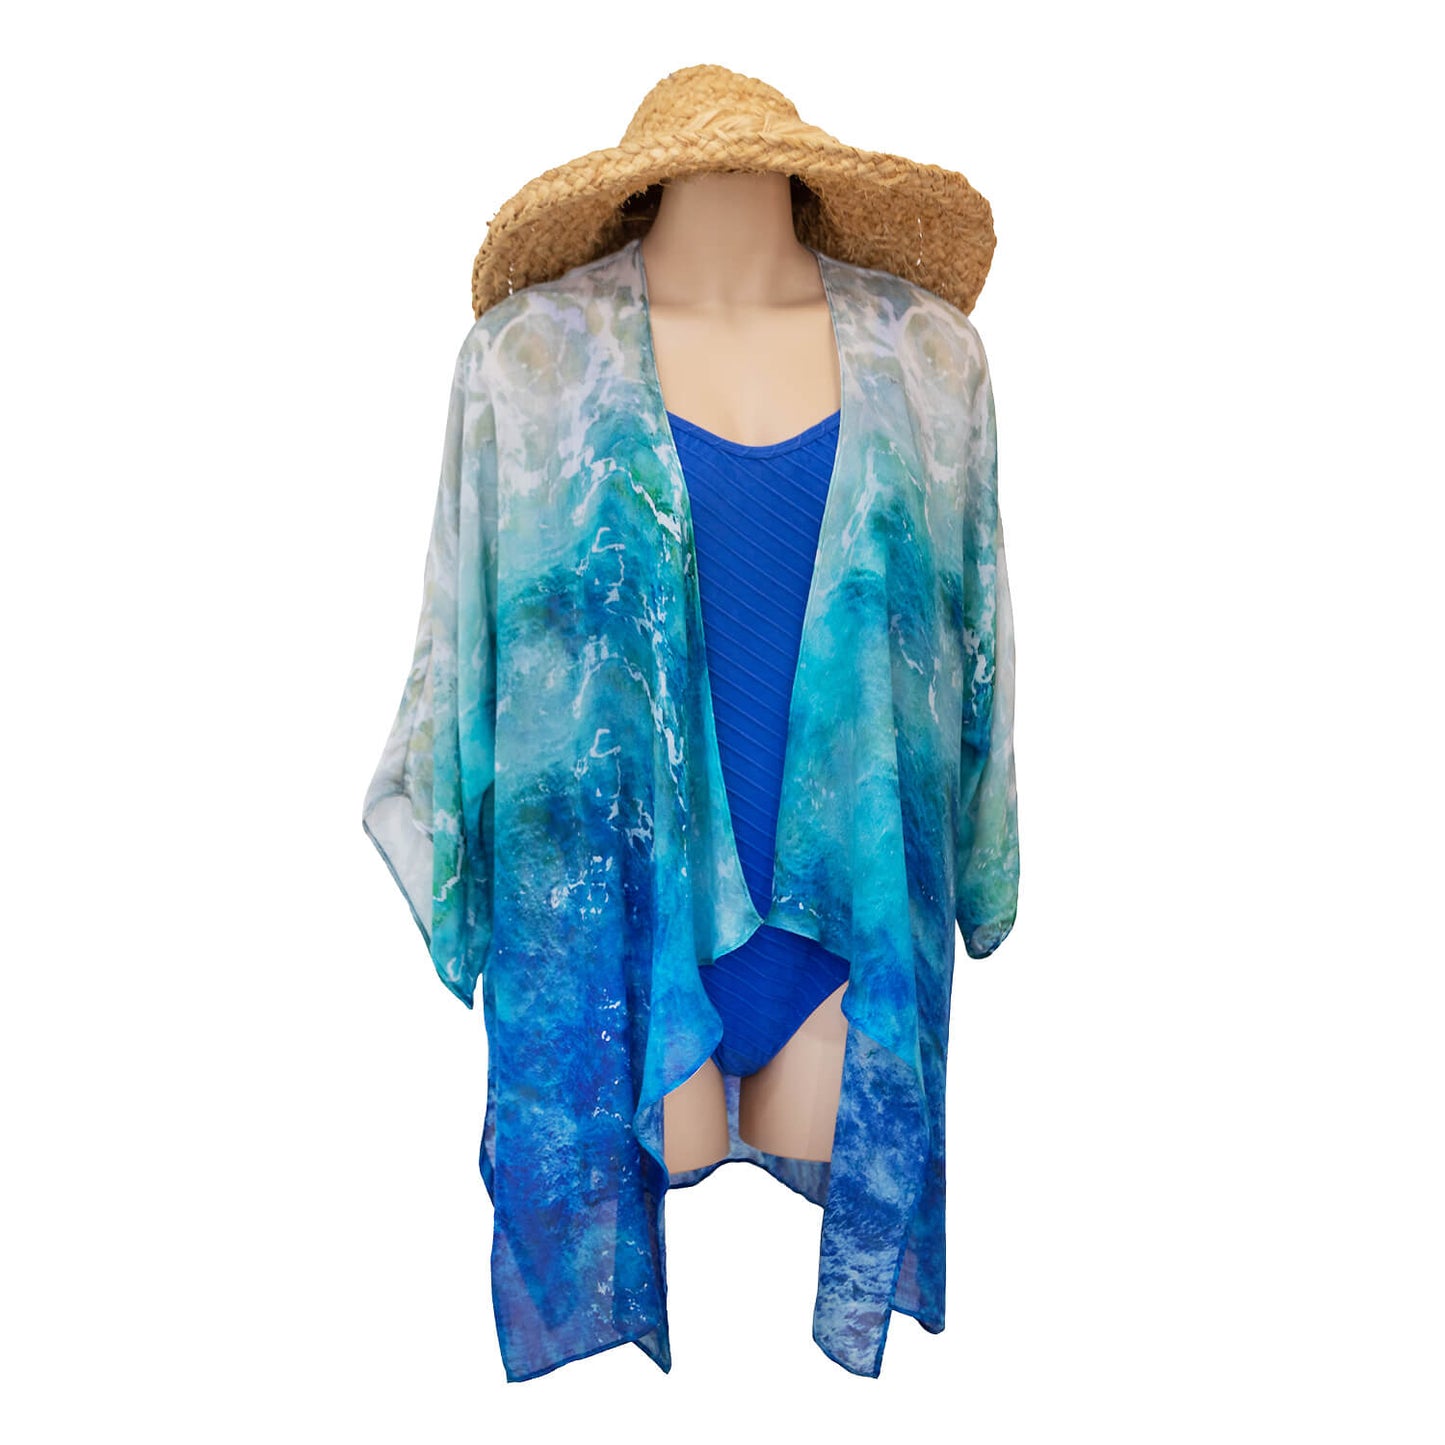 barchetta waterfall jacket beach coverup over blue bathers